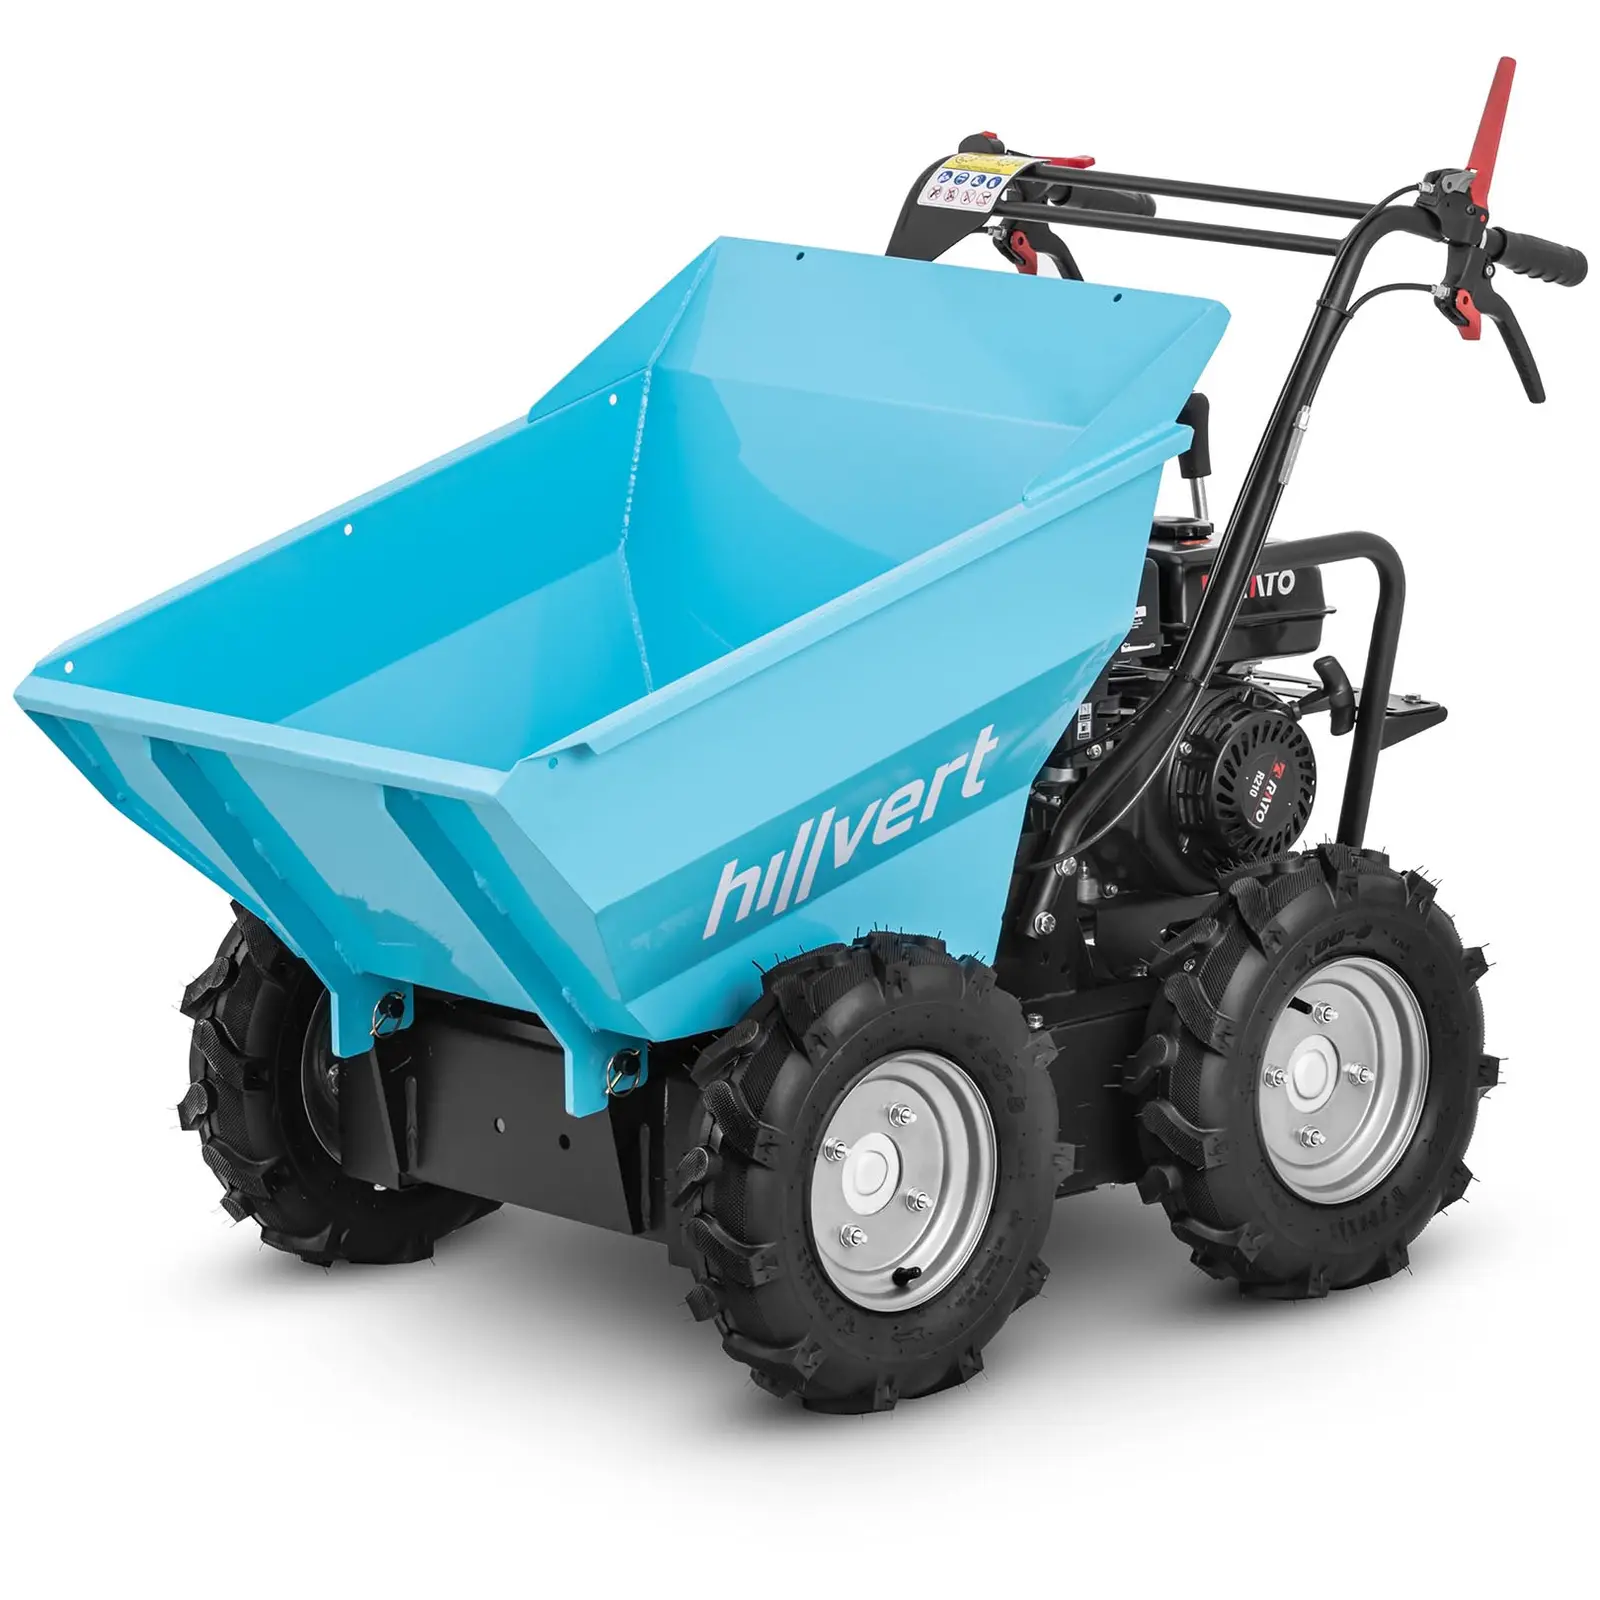 Motor wheelbarrow - with wheels - up to 300 kg - 4.1 kW